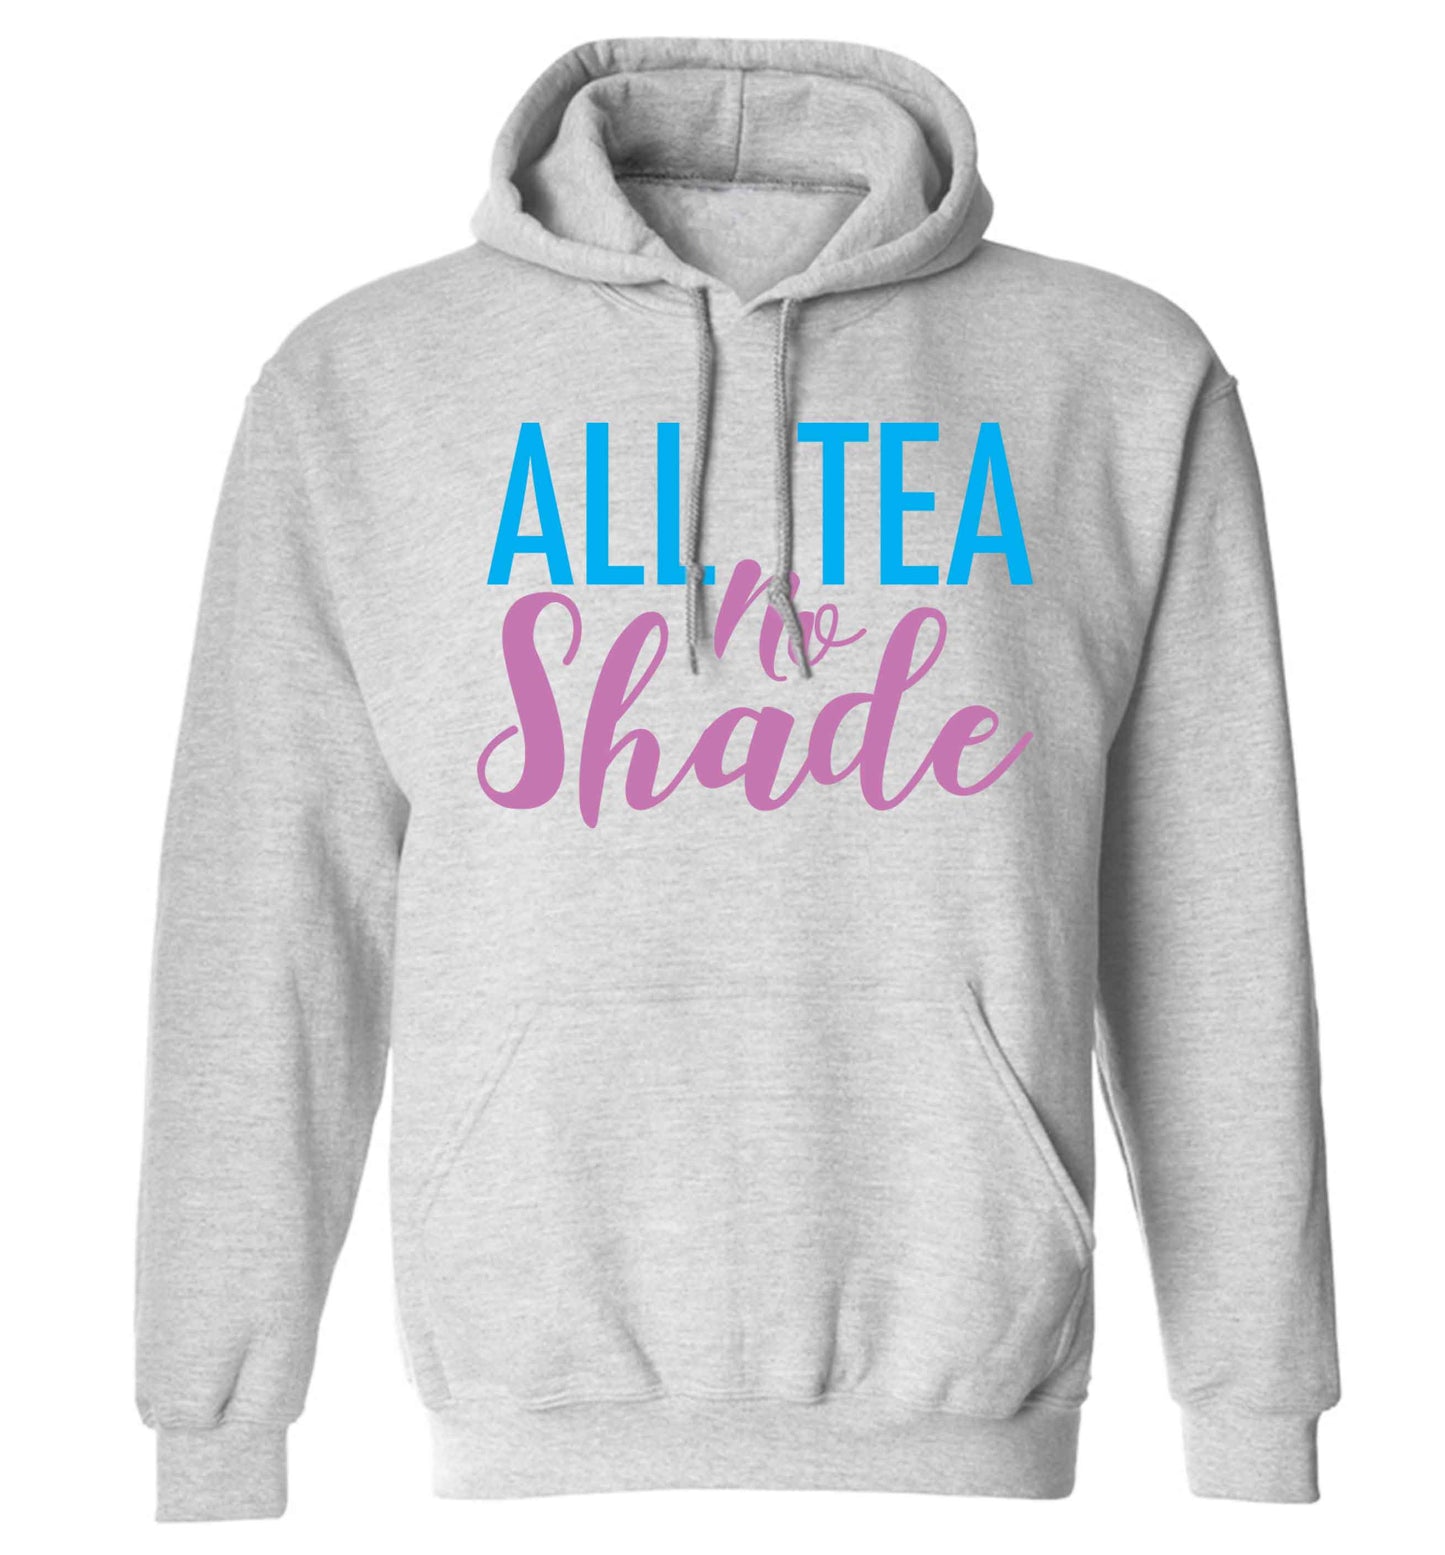 All tea no shade adults unisex grey hoodie 2XL